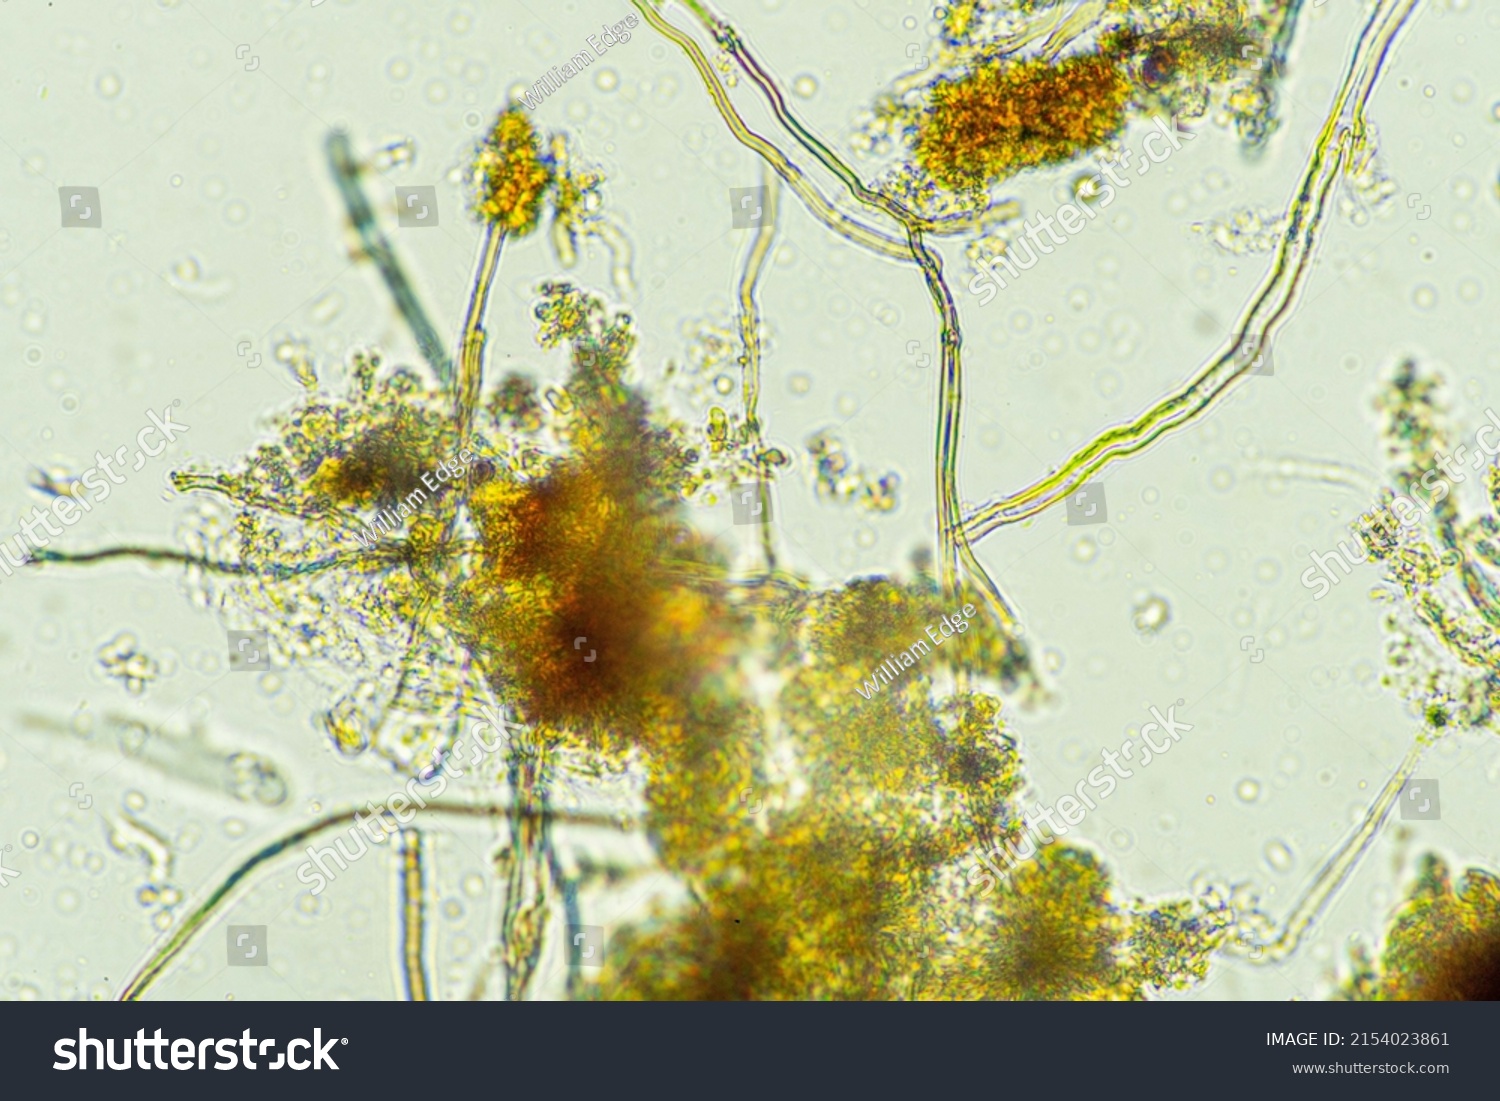 Microorganisms Soil Biology Nematodes Fungi Under Stock Photo ...